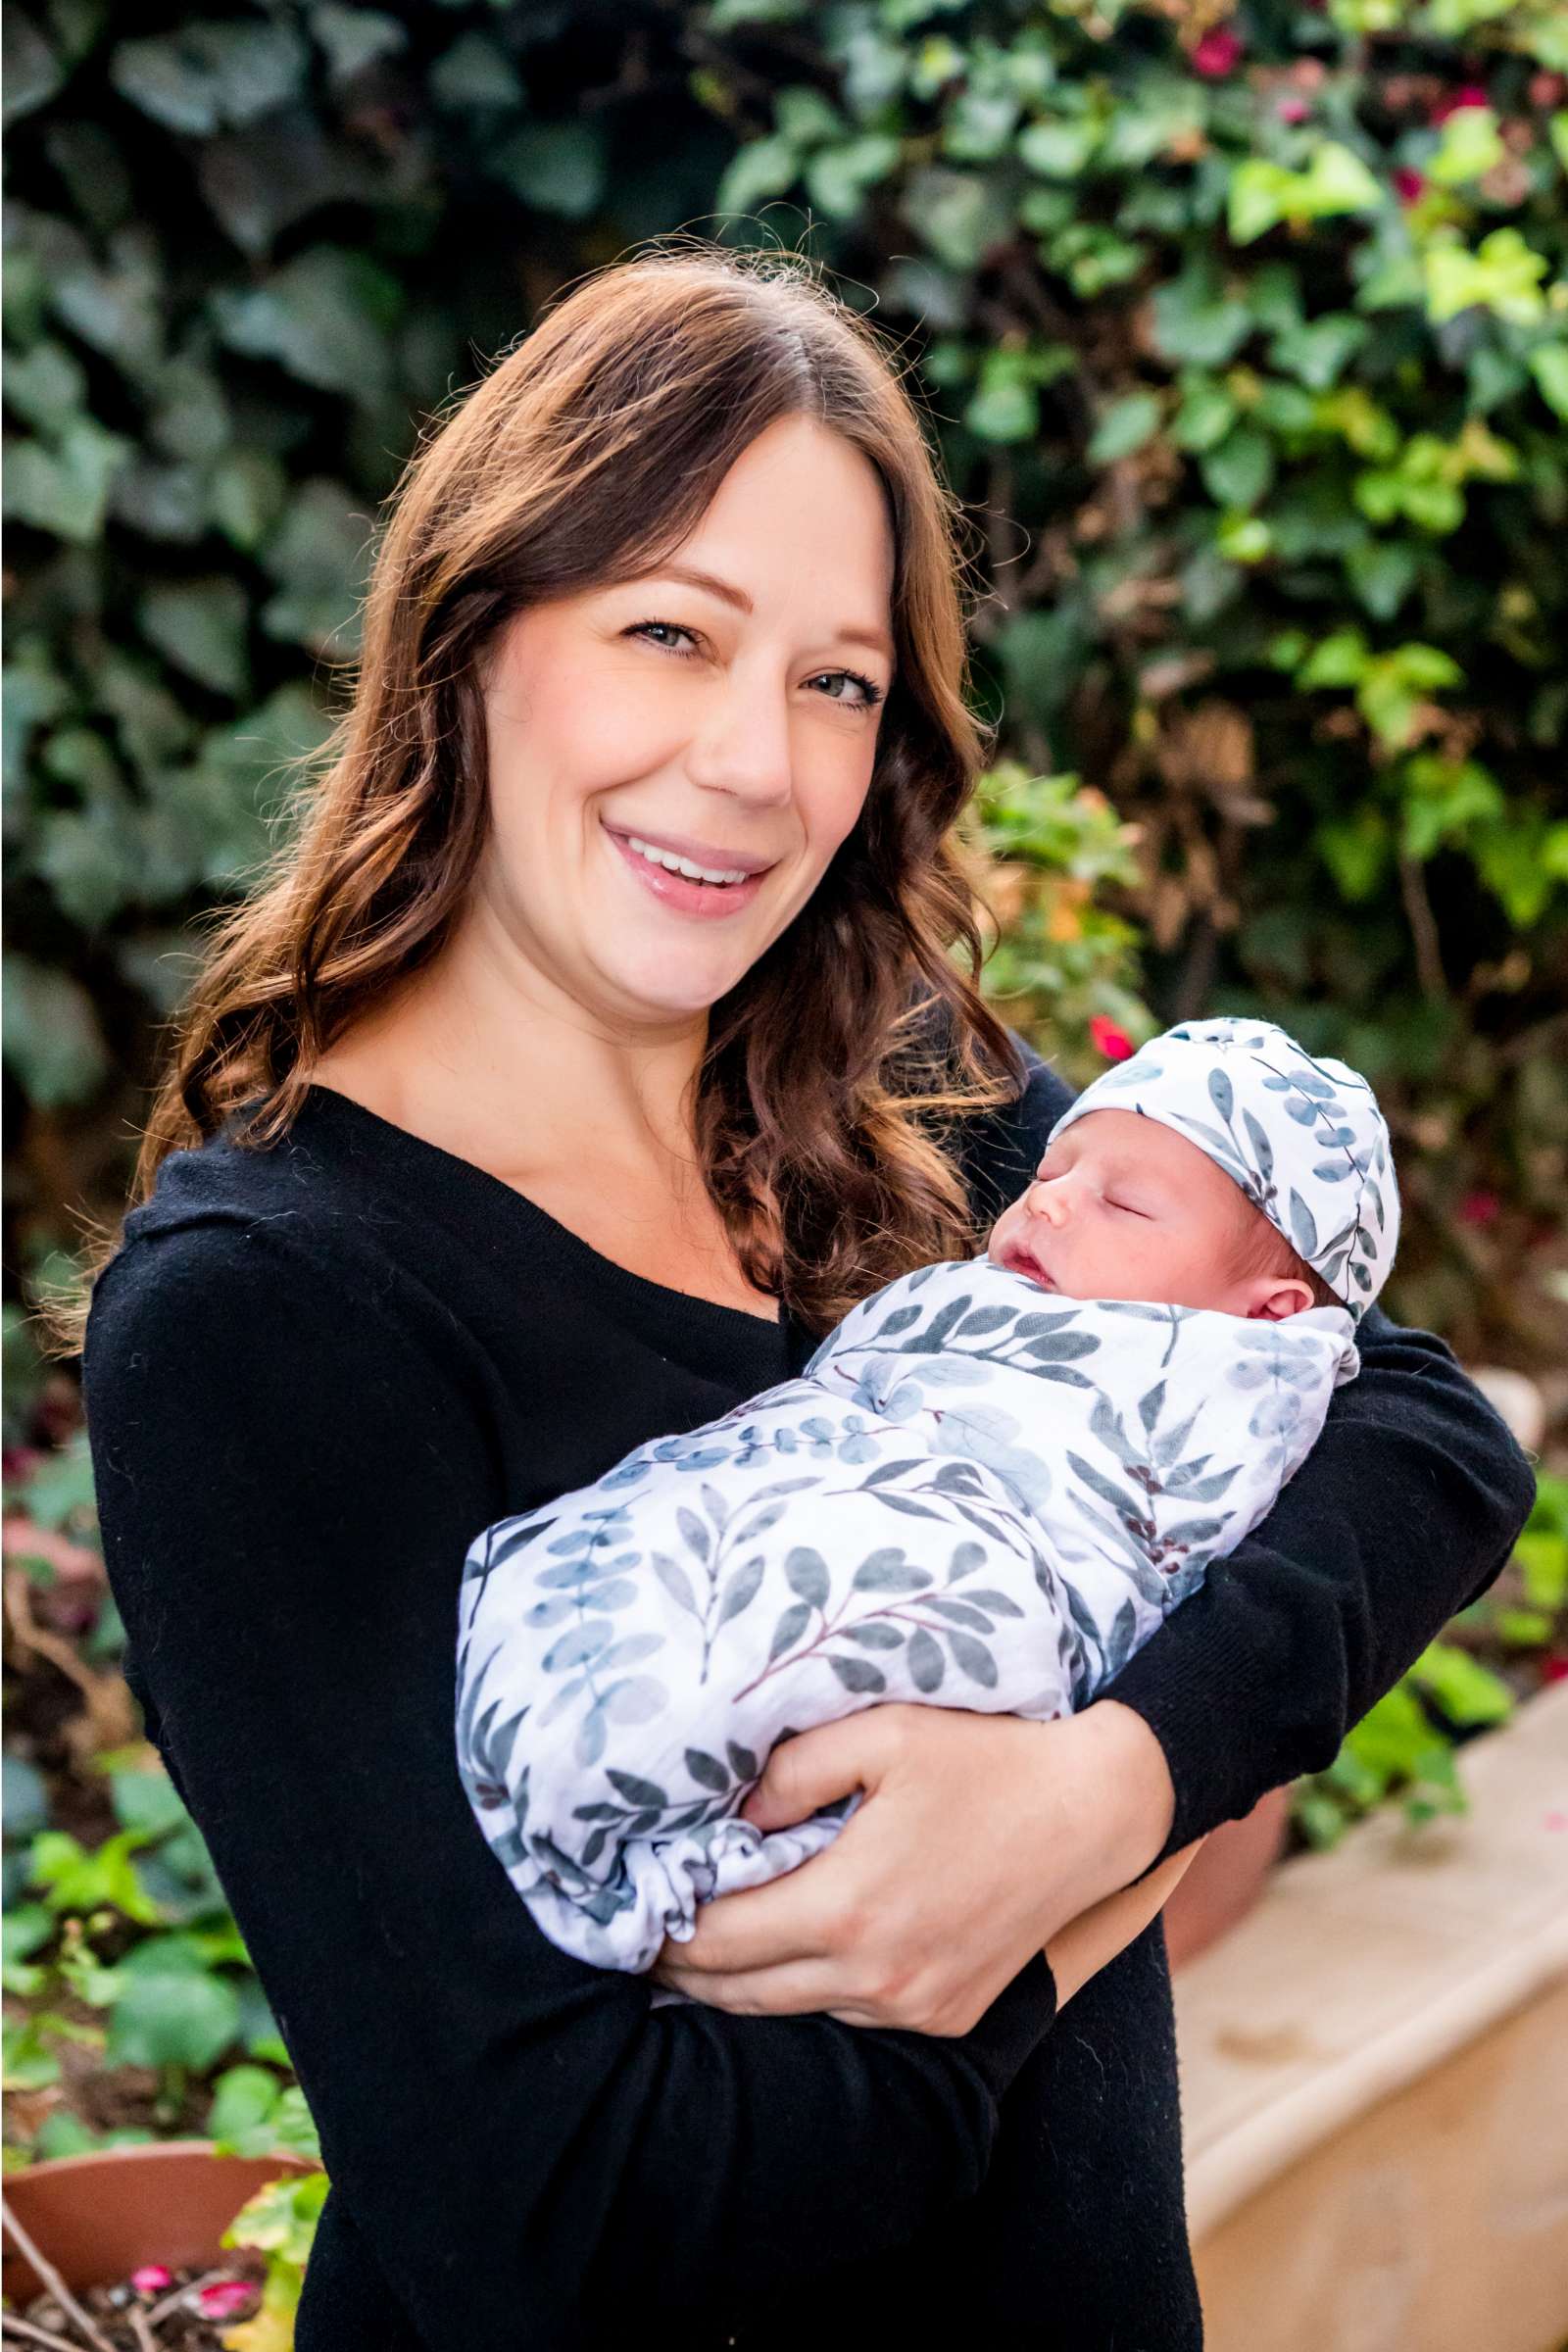 Newborn Photo Session, Gianna S. Newborn Photo #16 by True Photography